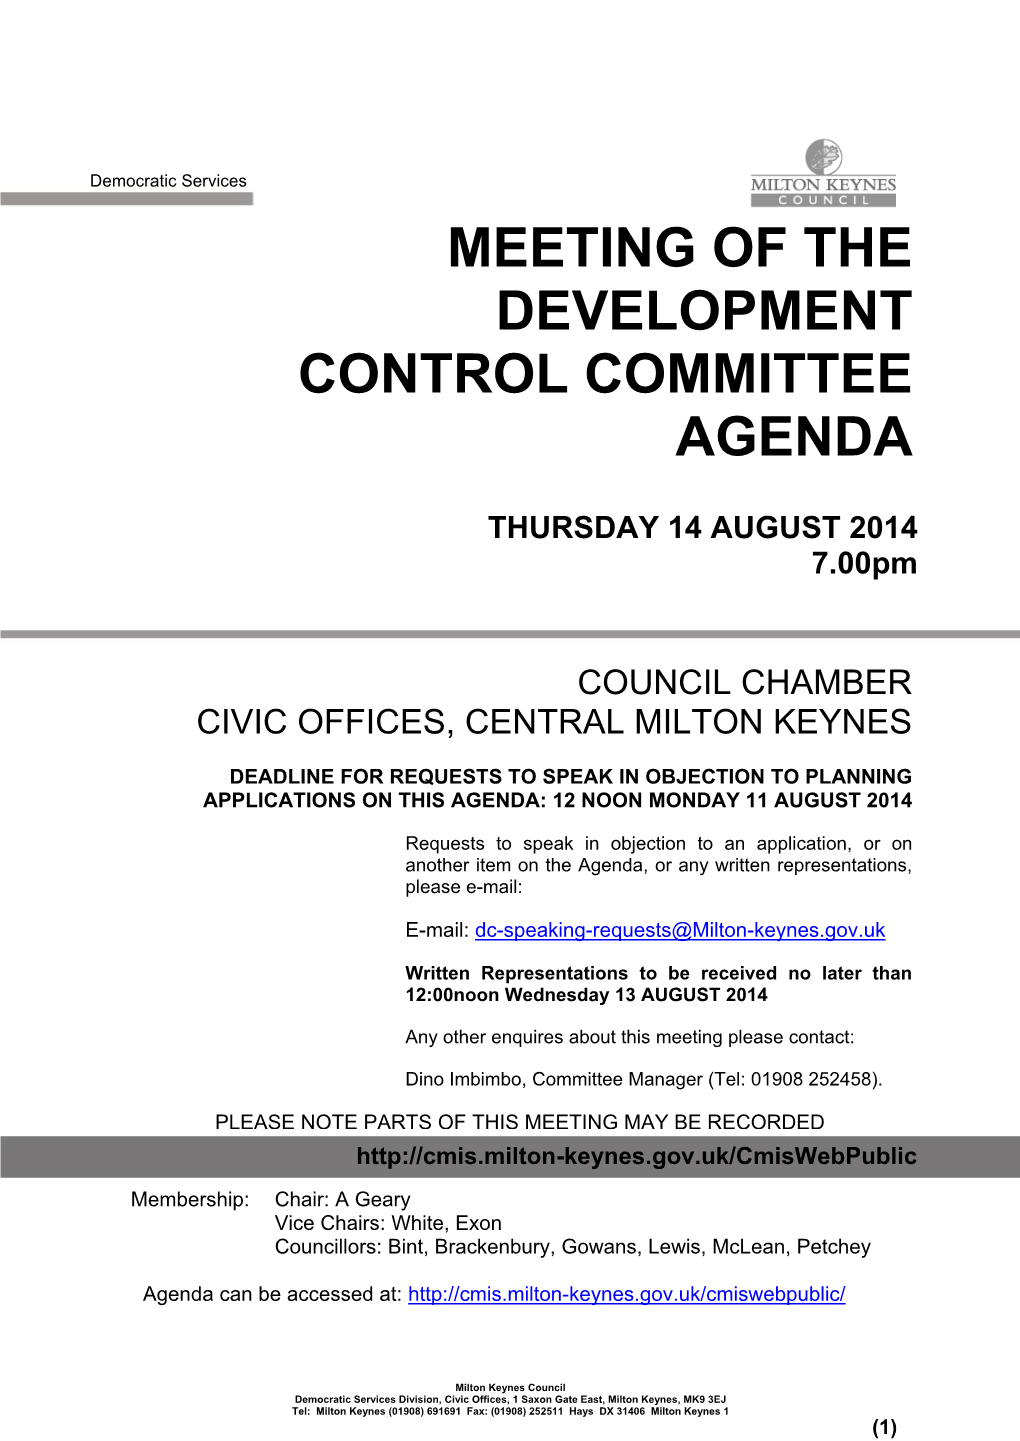 Meeting of the Development Control Committee Agenda